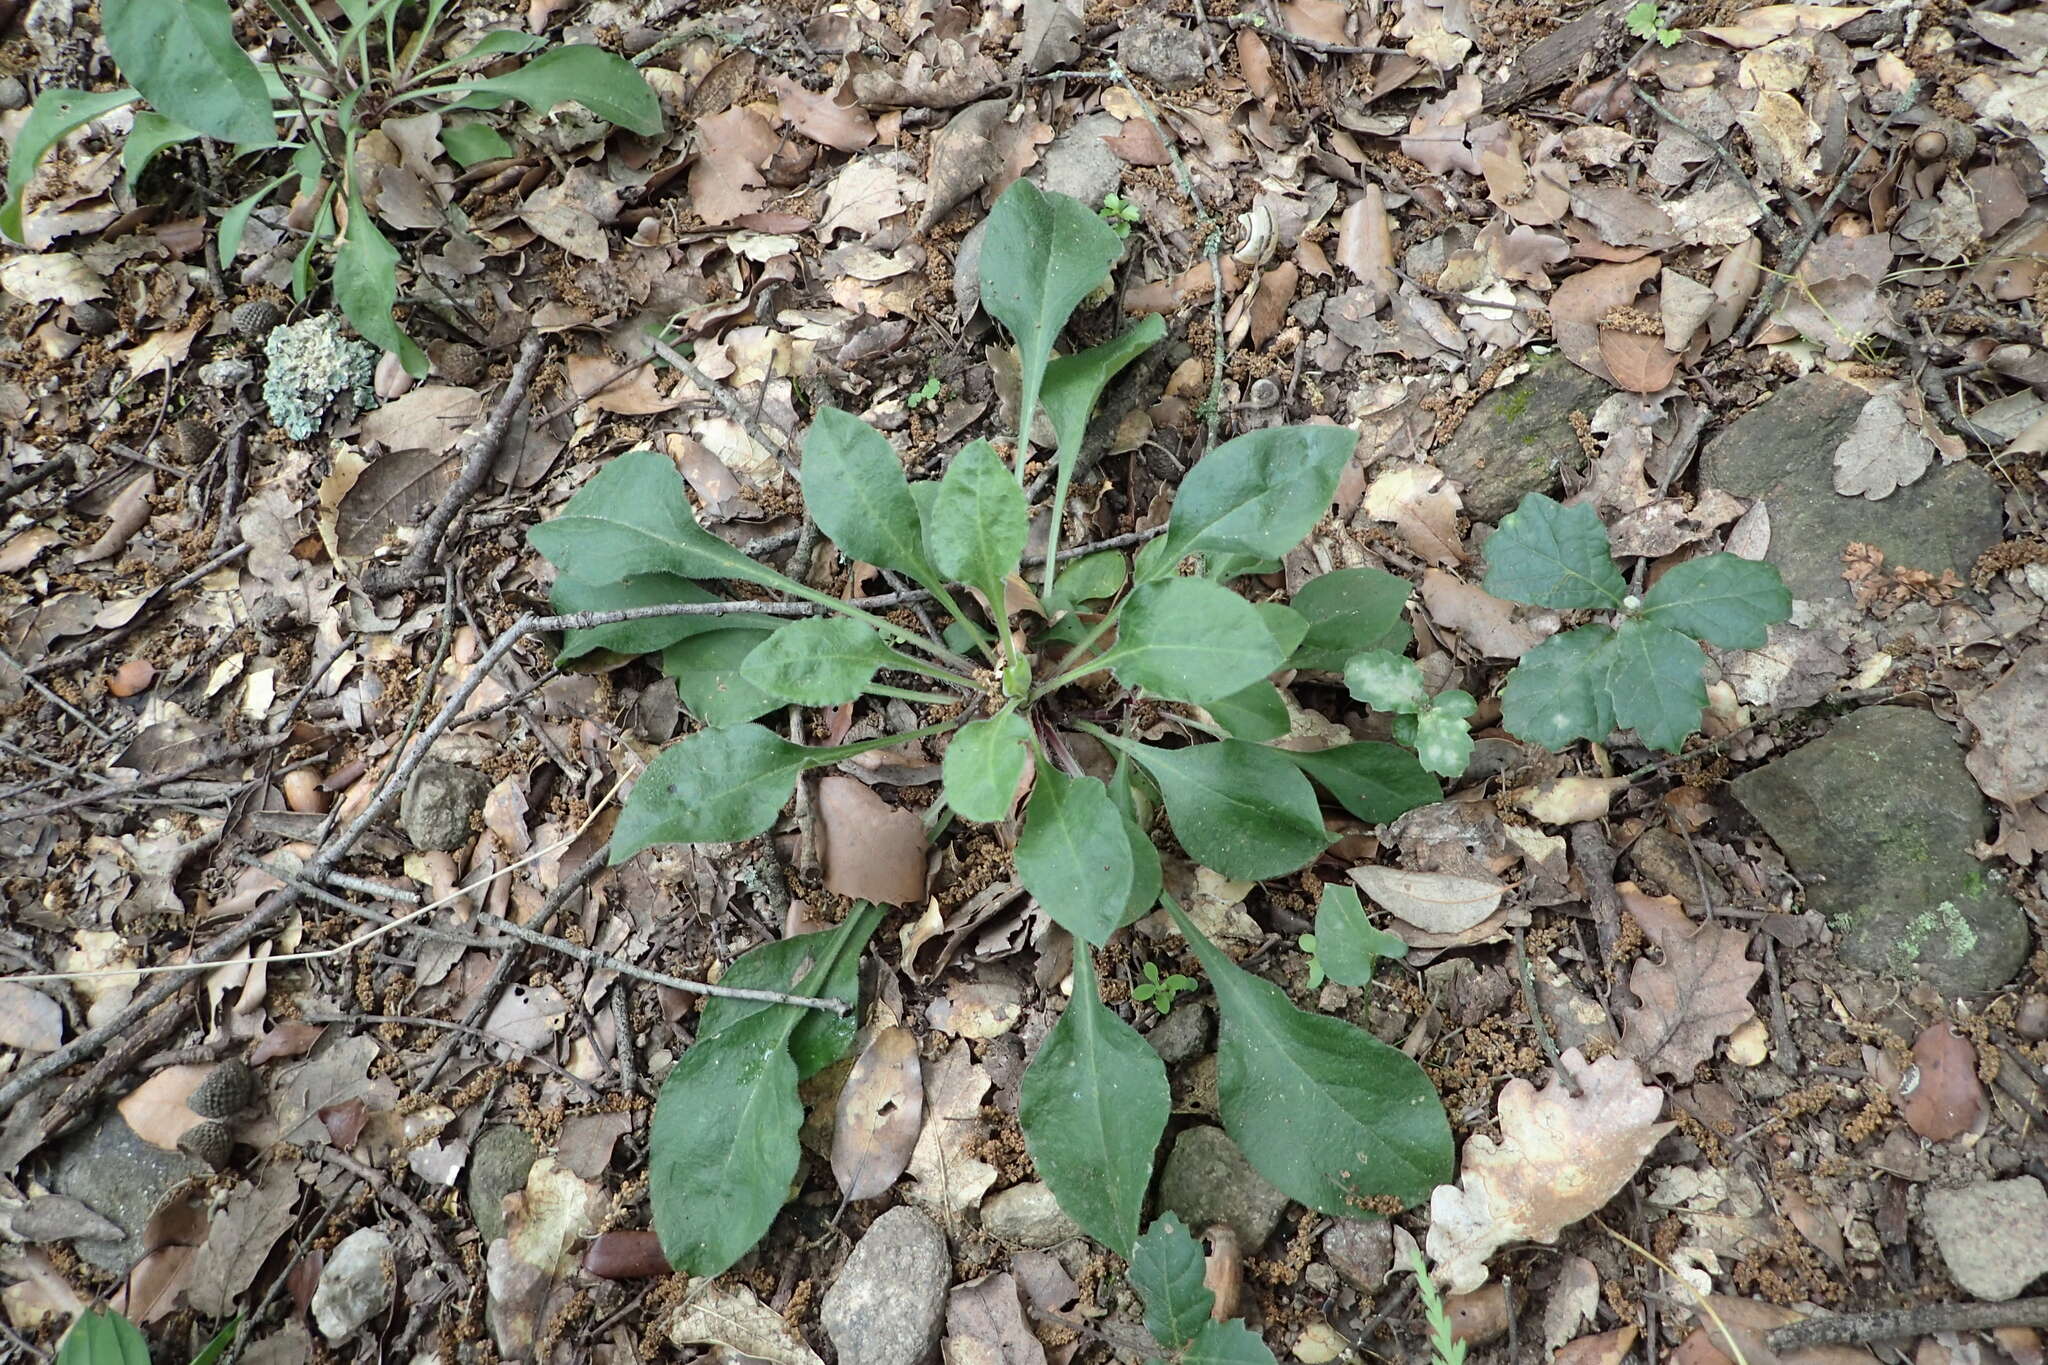 Image of Silene viridiflora L.